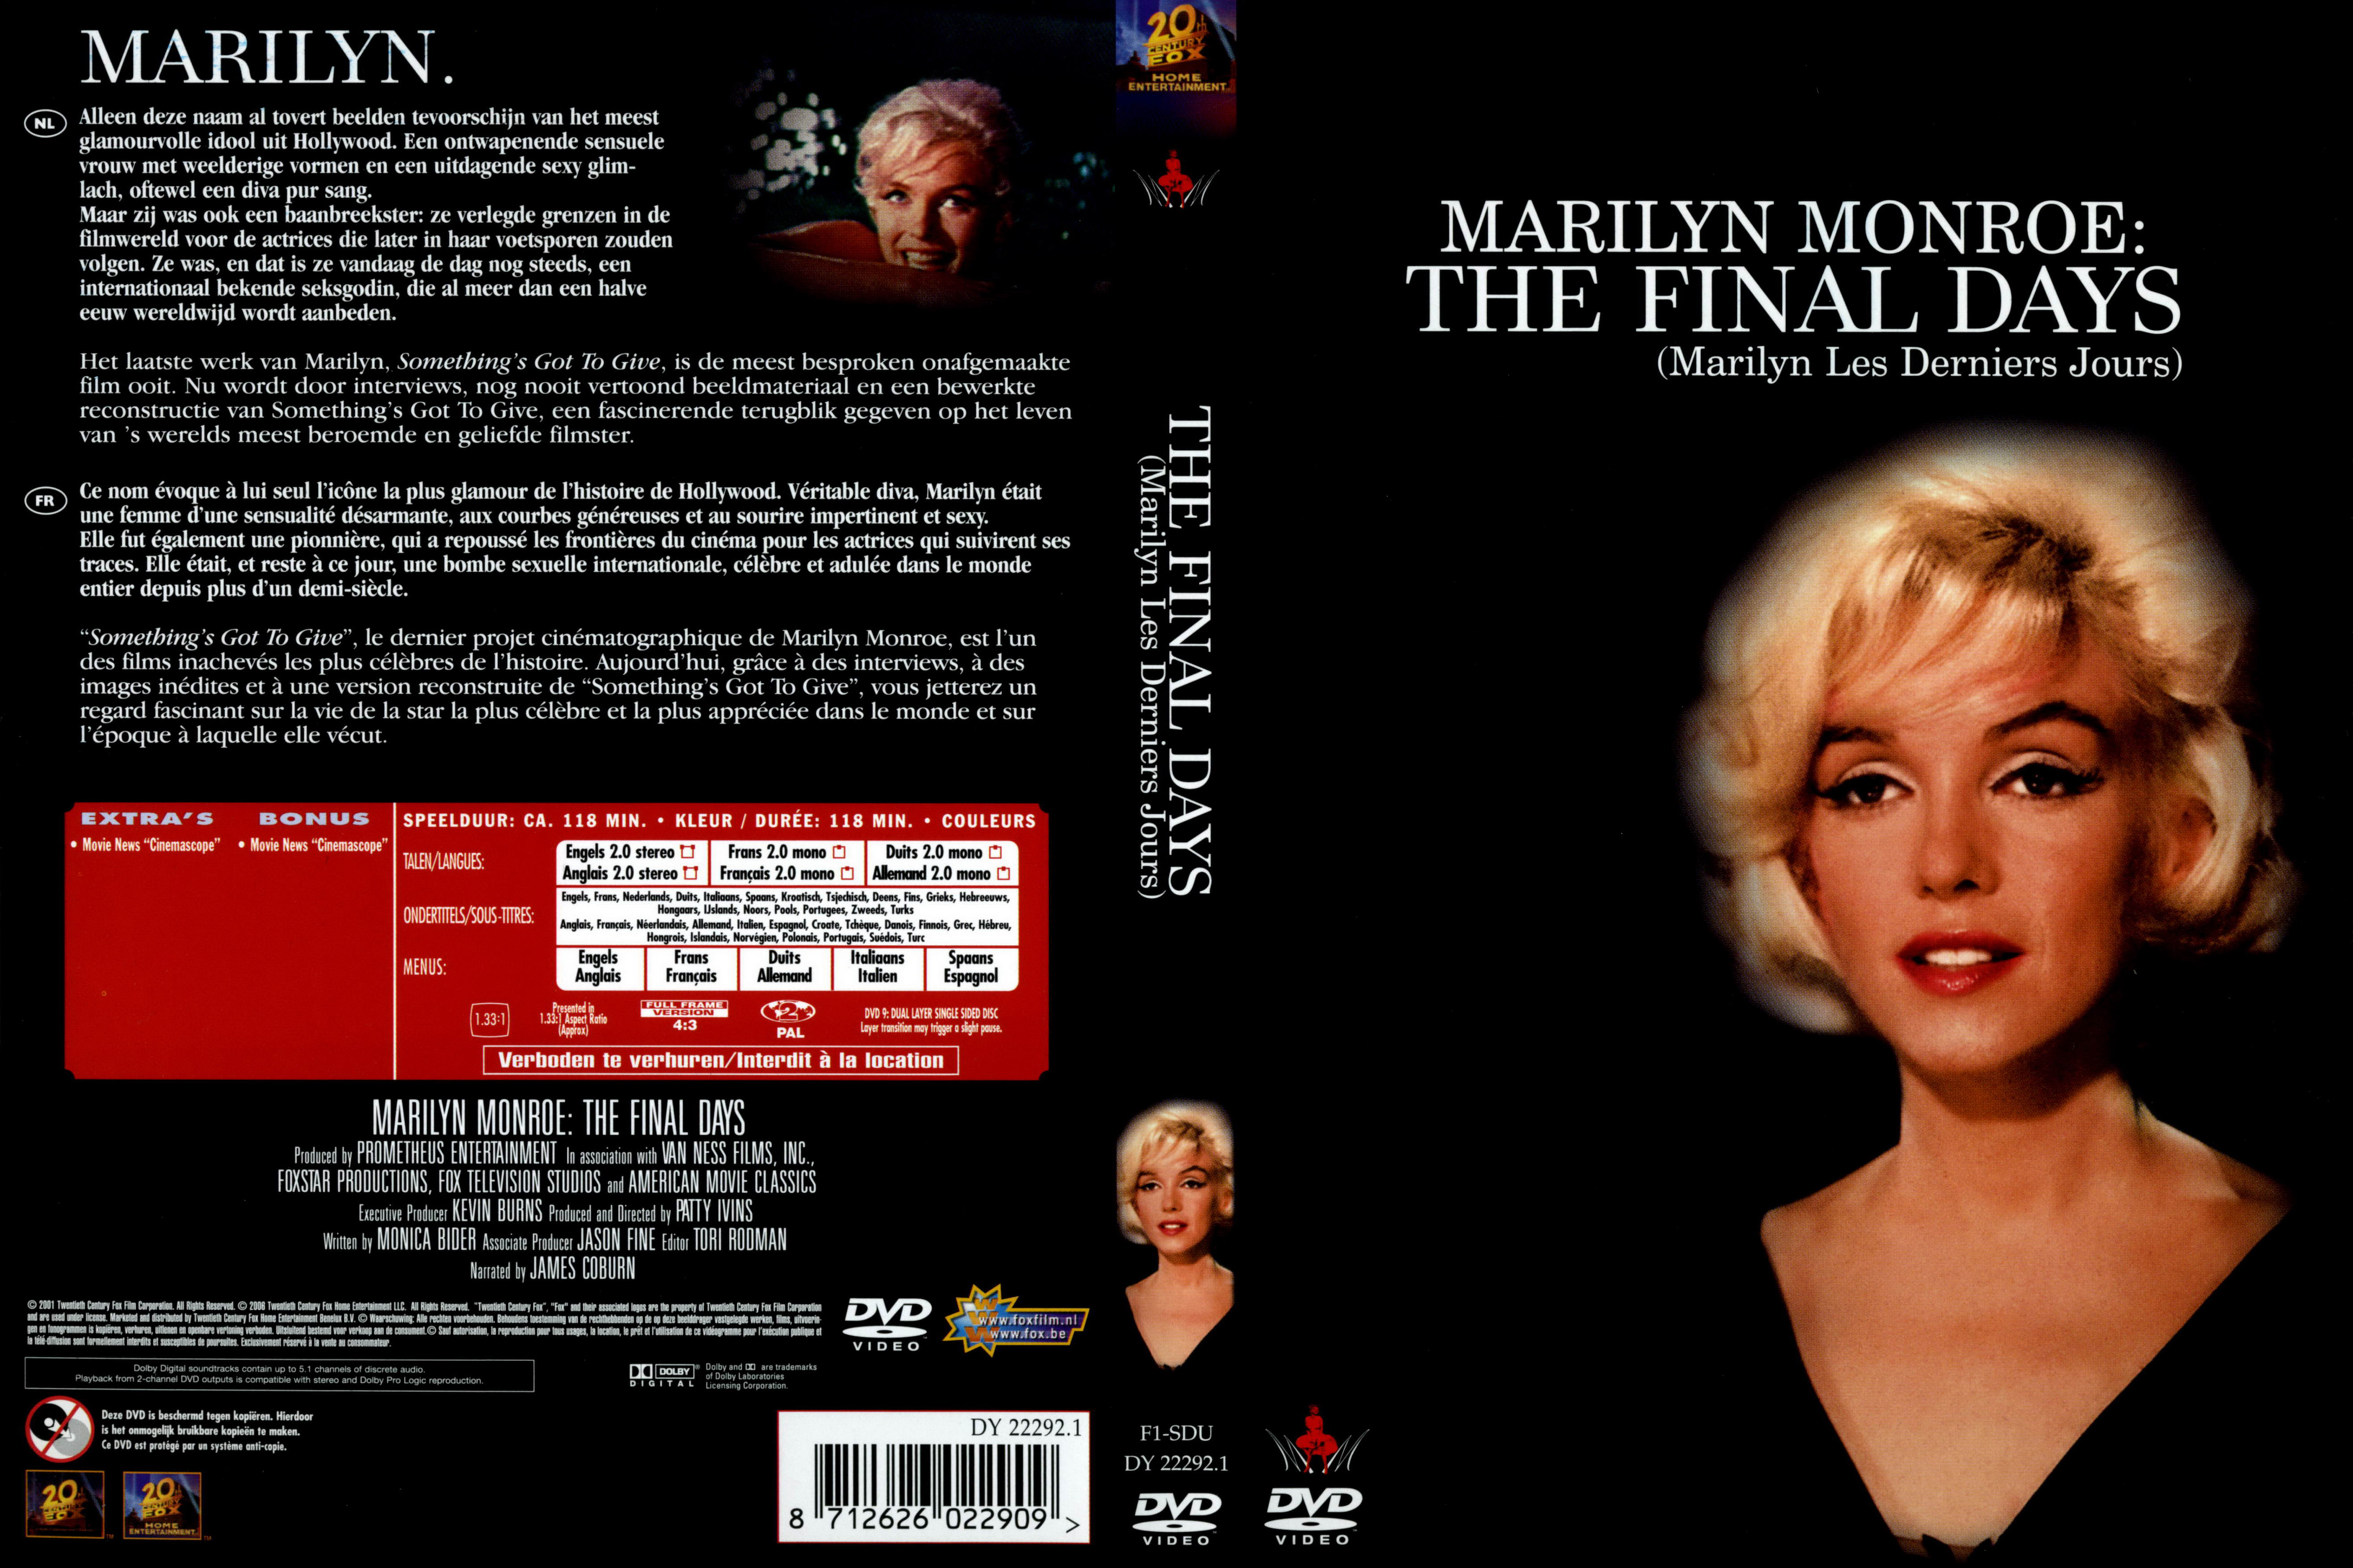 Jaquette DVD Marilyn les derniers jours VERS BELGE( dpi 400)